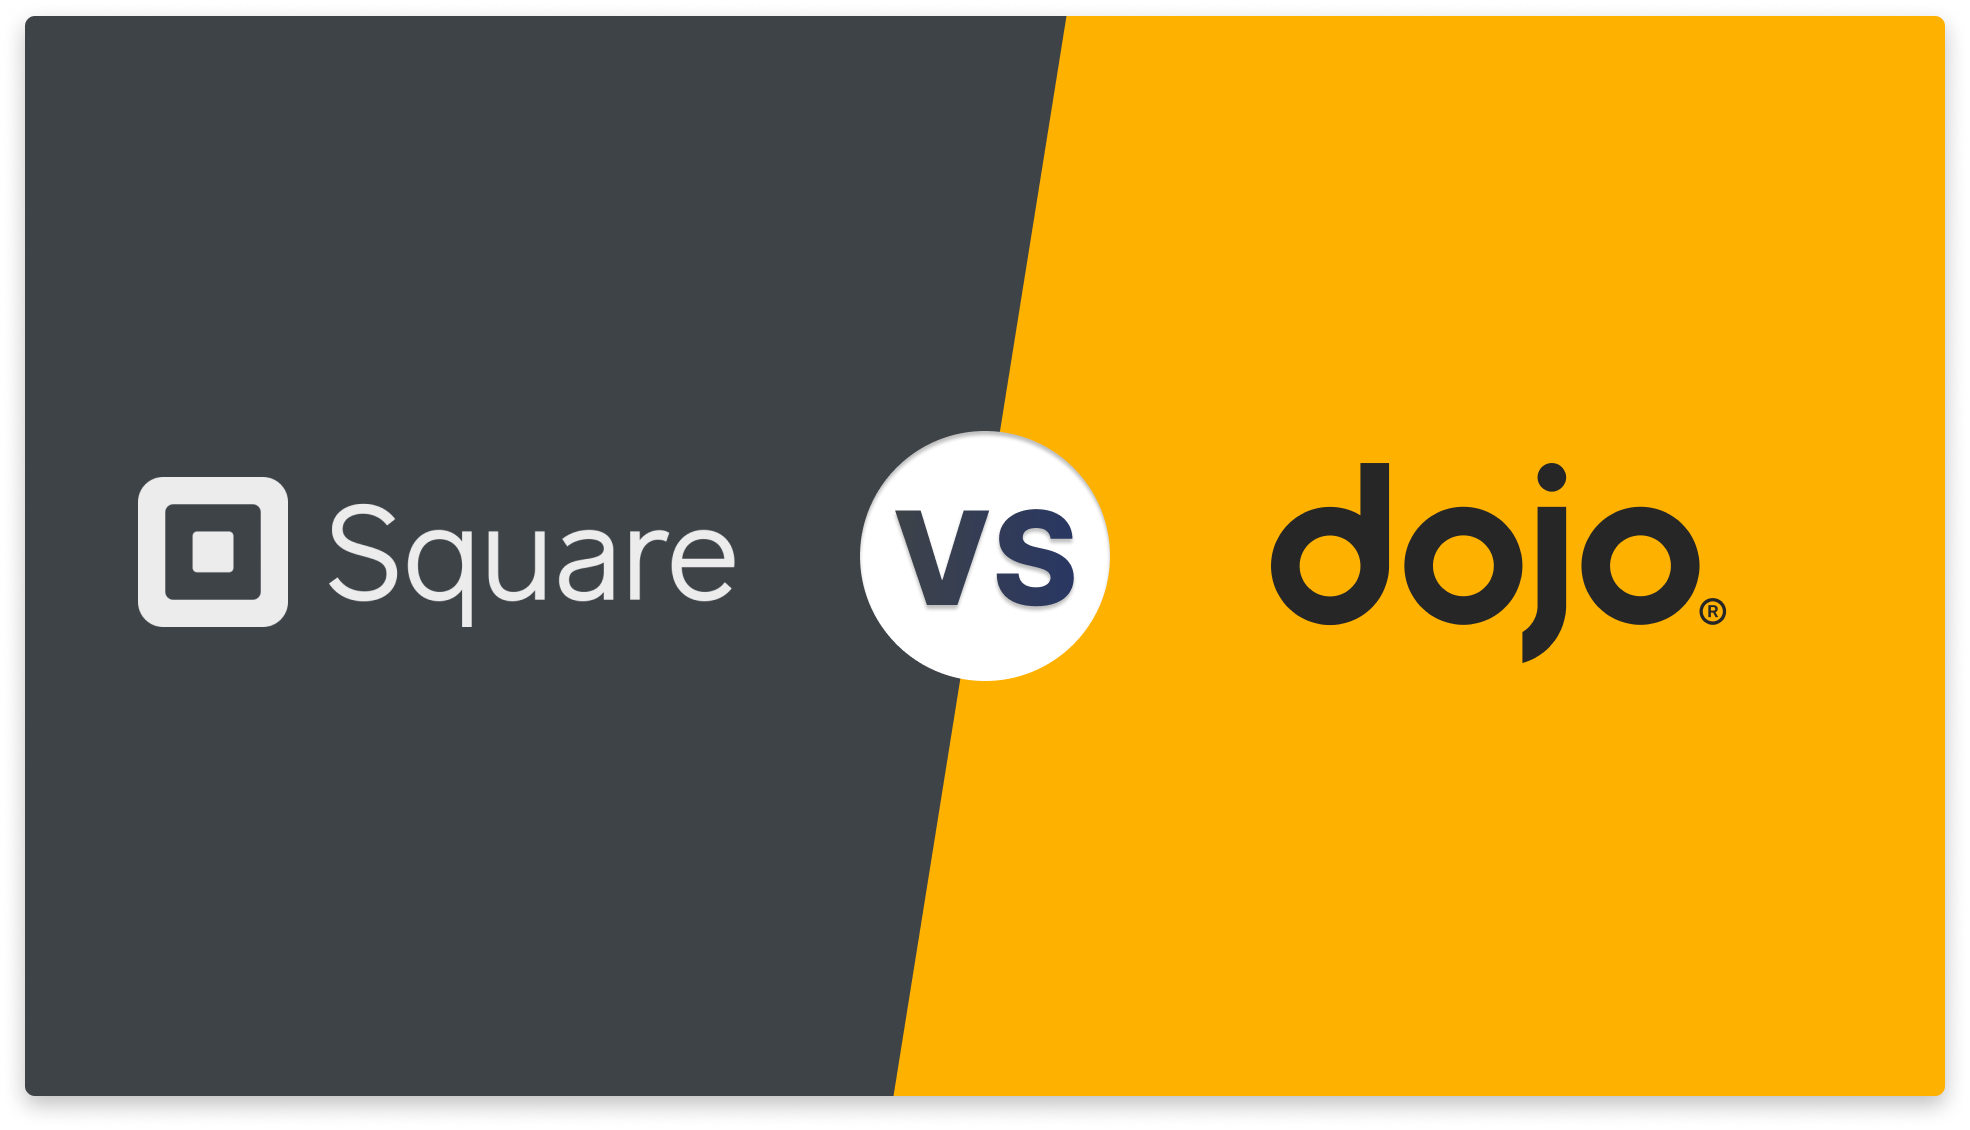 Square vs Dojo - Who is better?